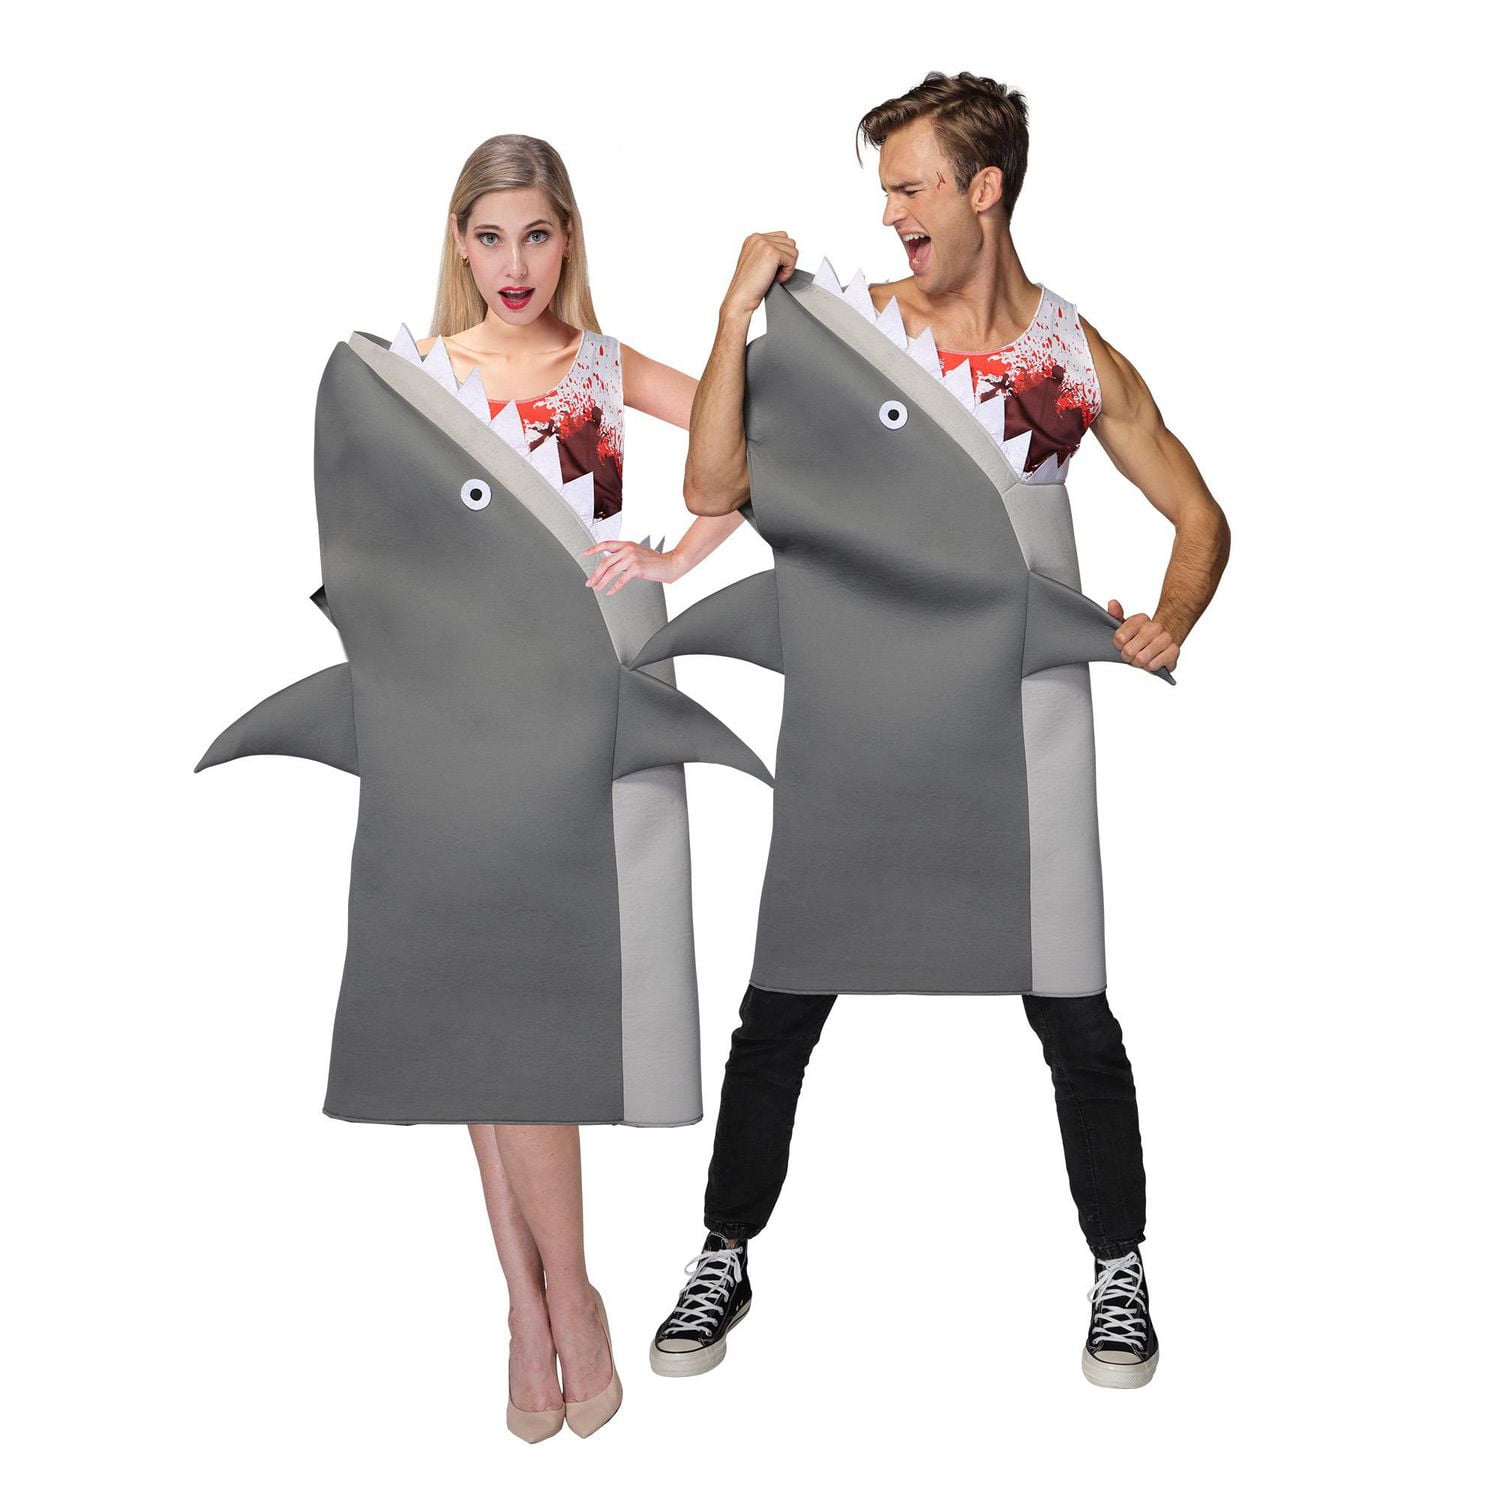 Sidewalk Shark 11” - Strip Mall Surfer - premium complete